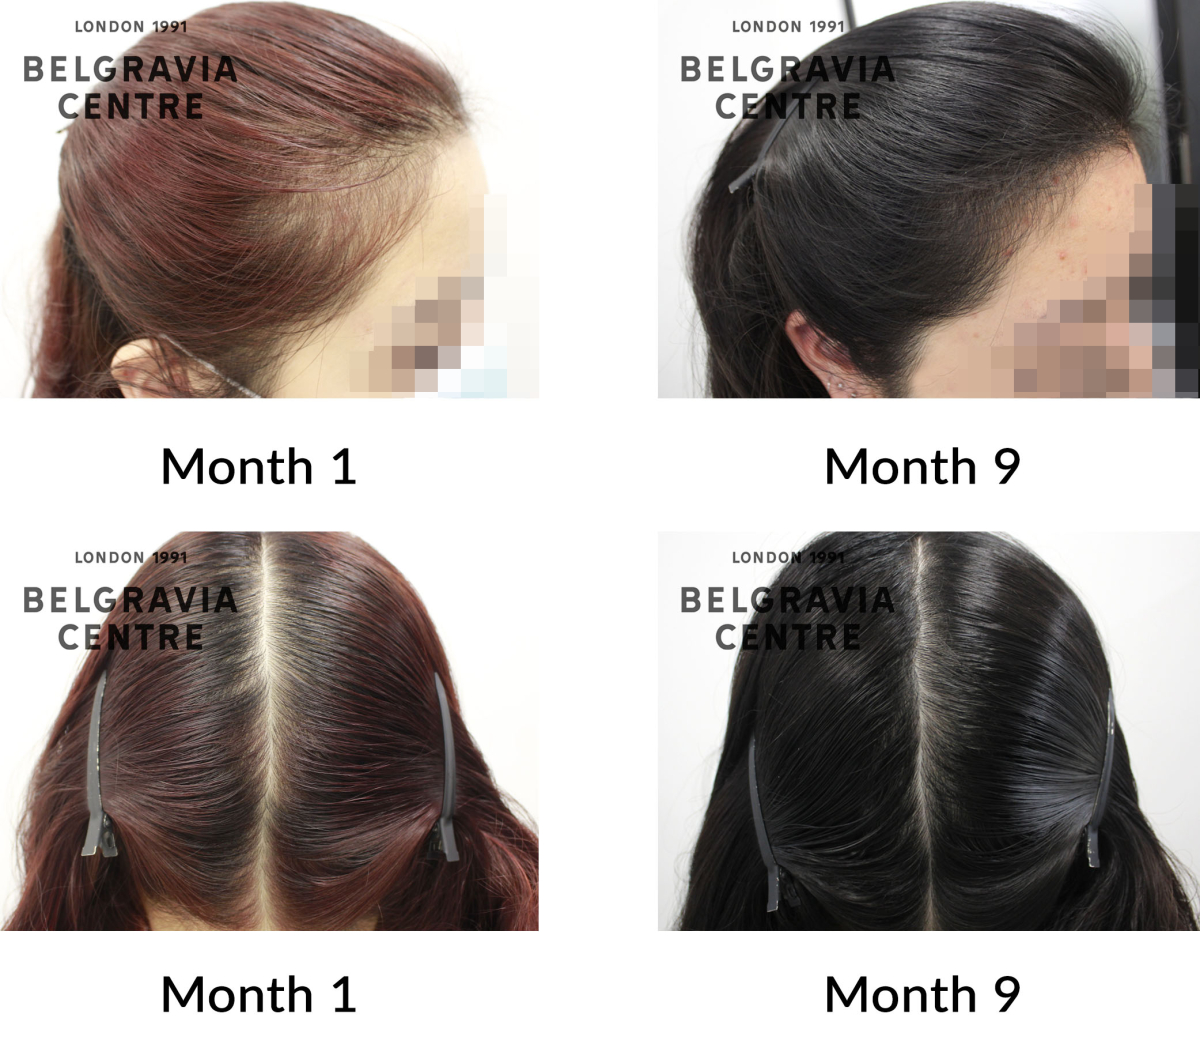 telogen effluvium and female pattern hair loss the belgravia centre 428629